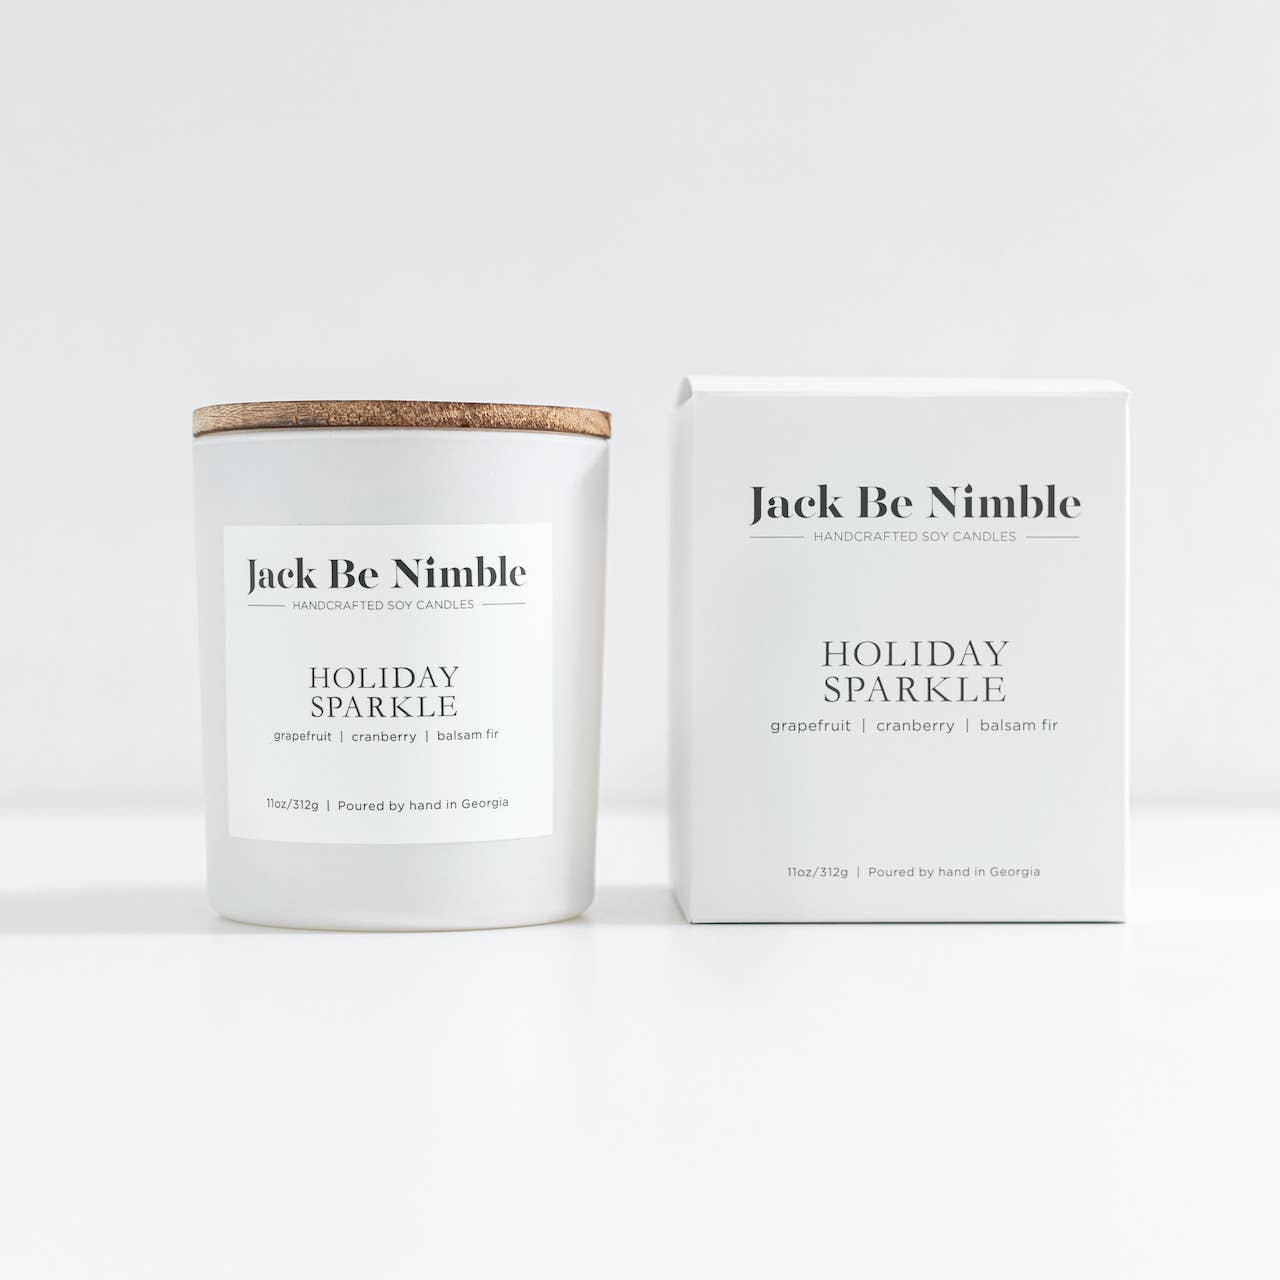 Jack Be Nimble Candles - 11oz Holiday Sparkle Soy Candle